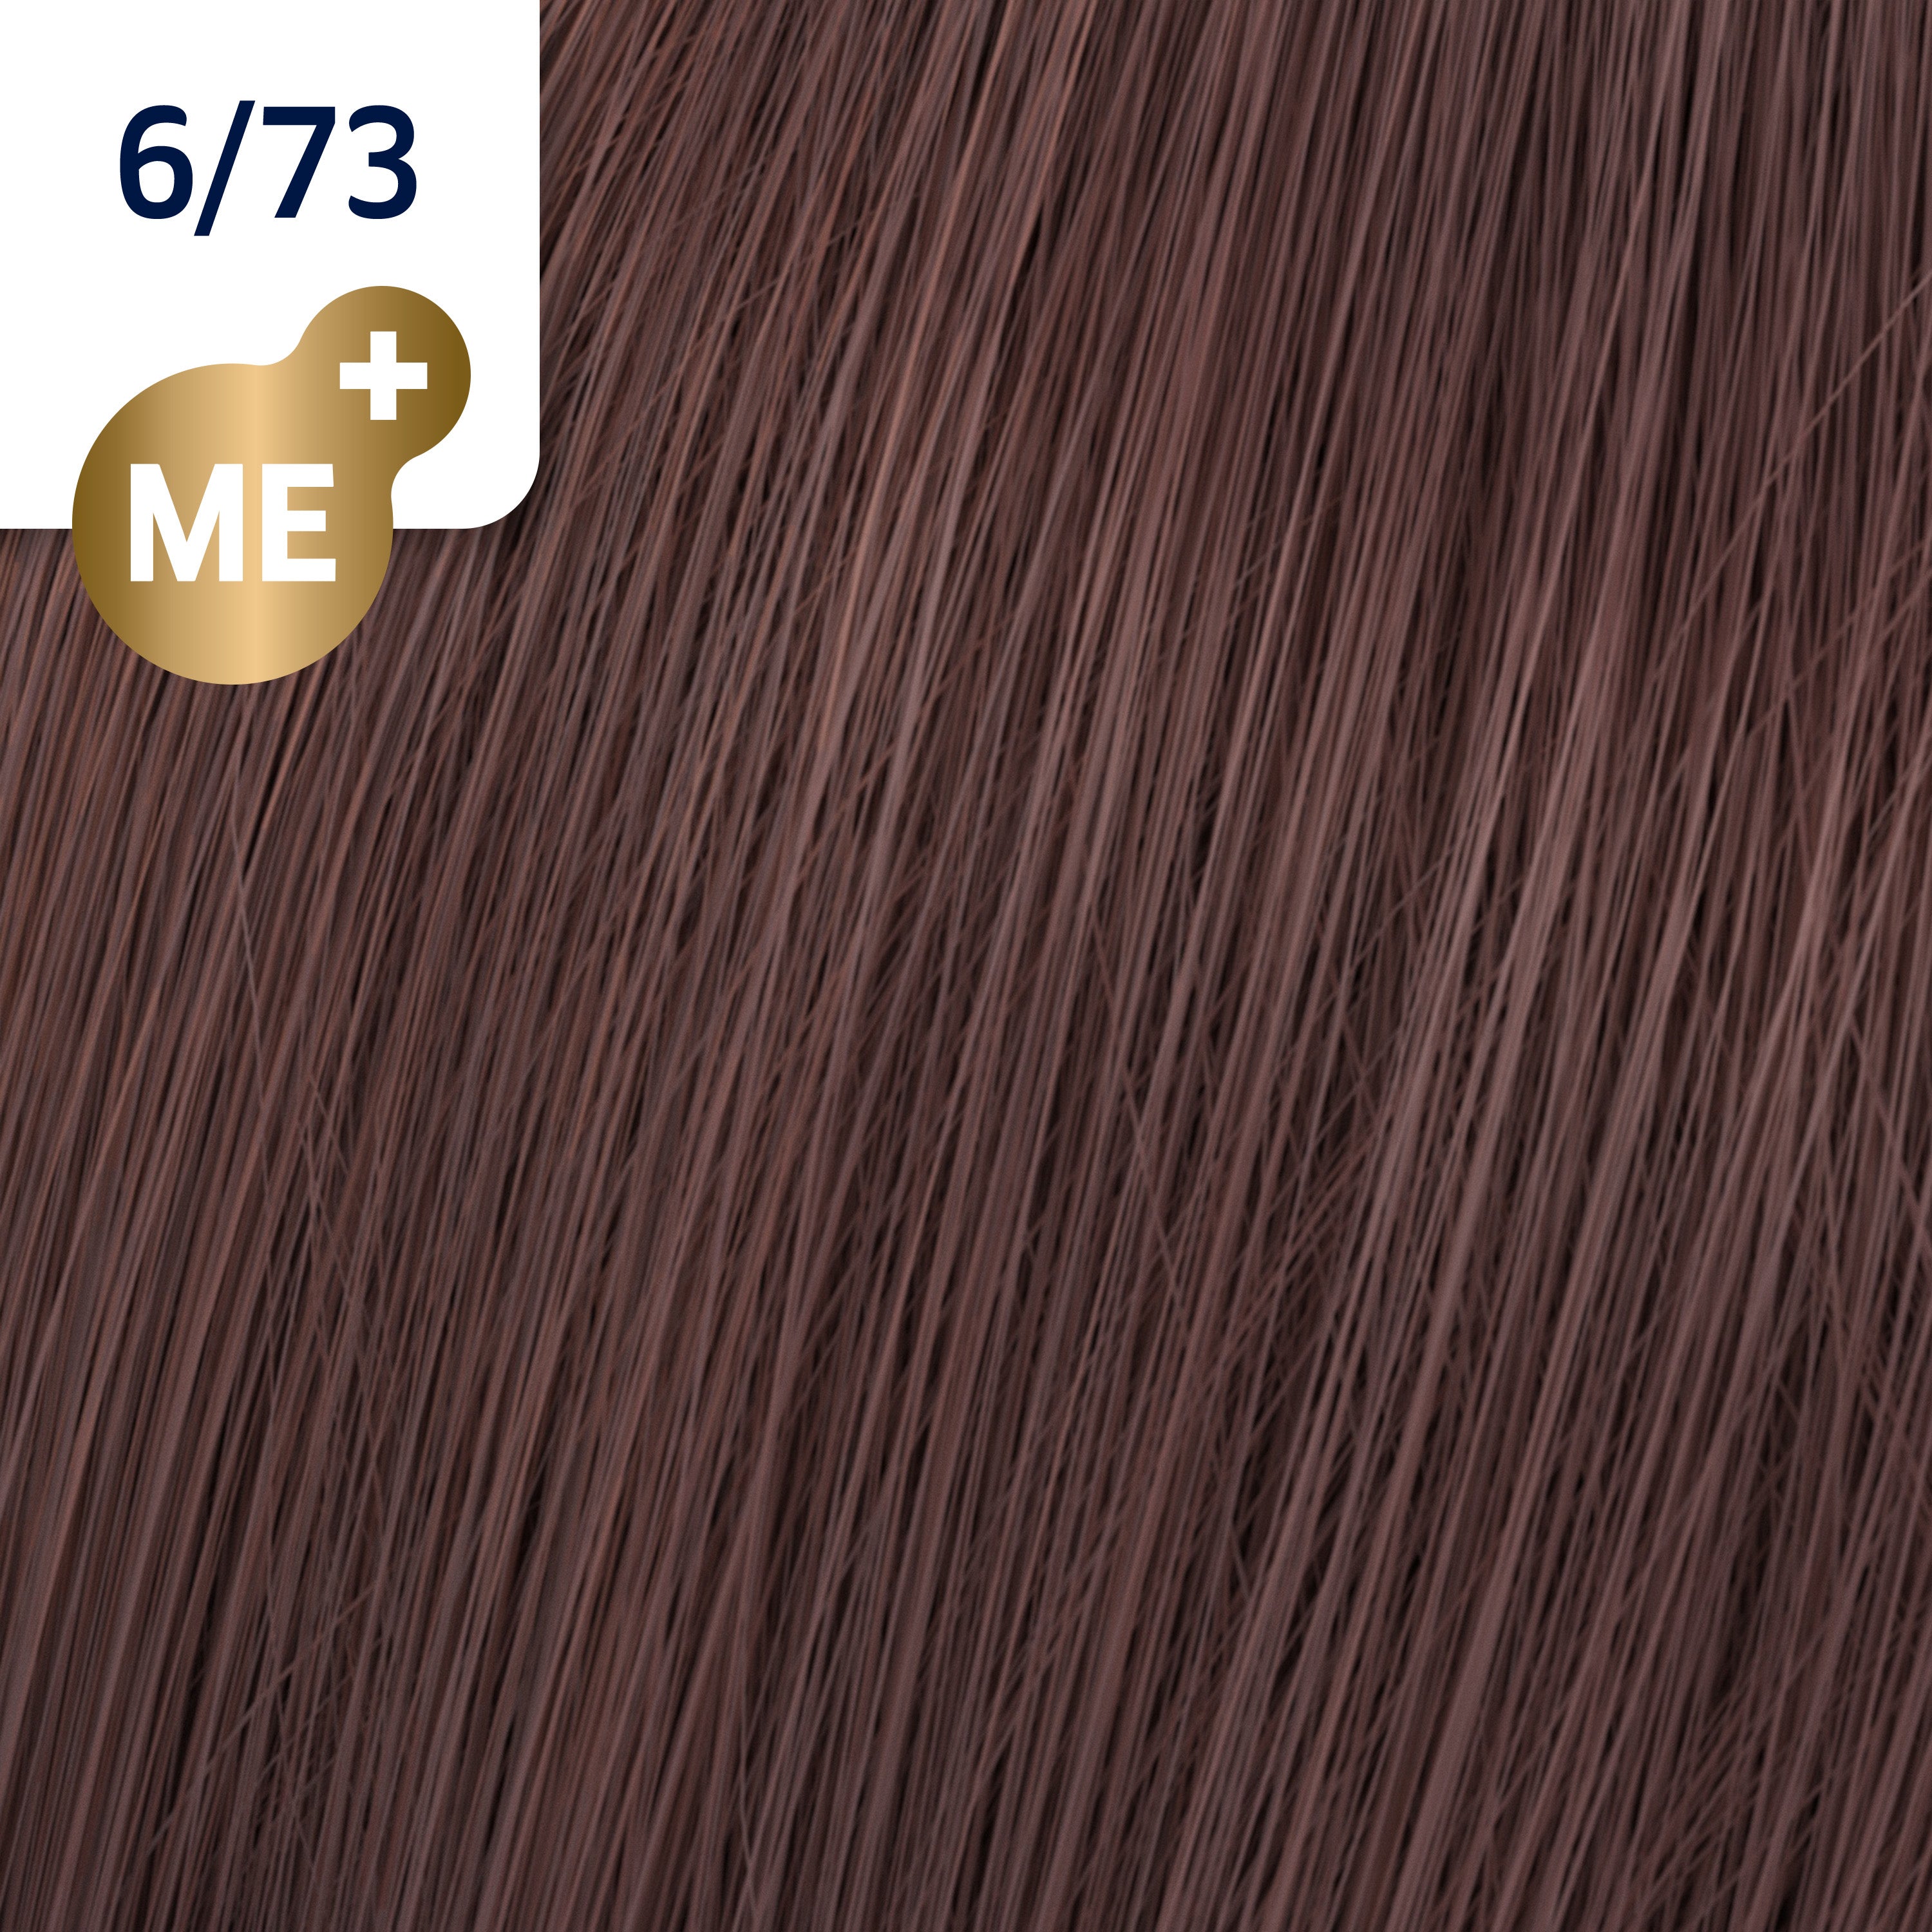 Wella Koleston Perfect Me+ Deep Browns 6/73 Dark Brunette - Gold Blonde